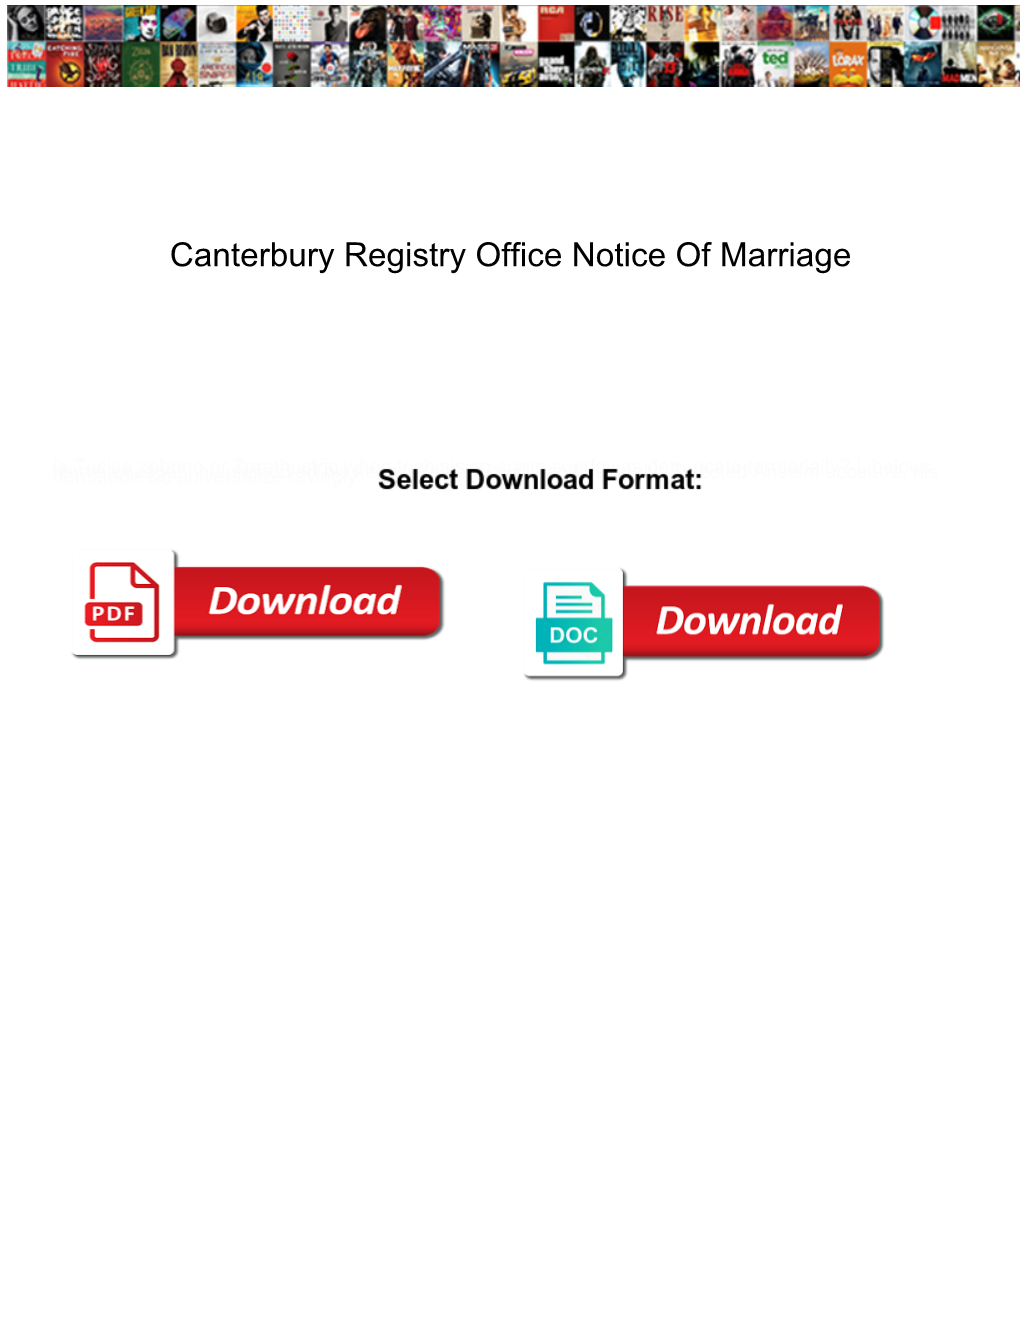 Canterbury Registry Office Notice of Marriage